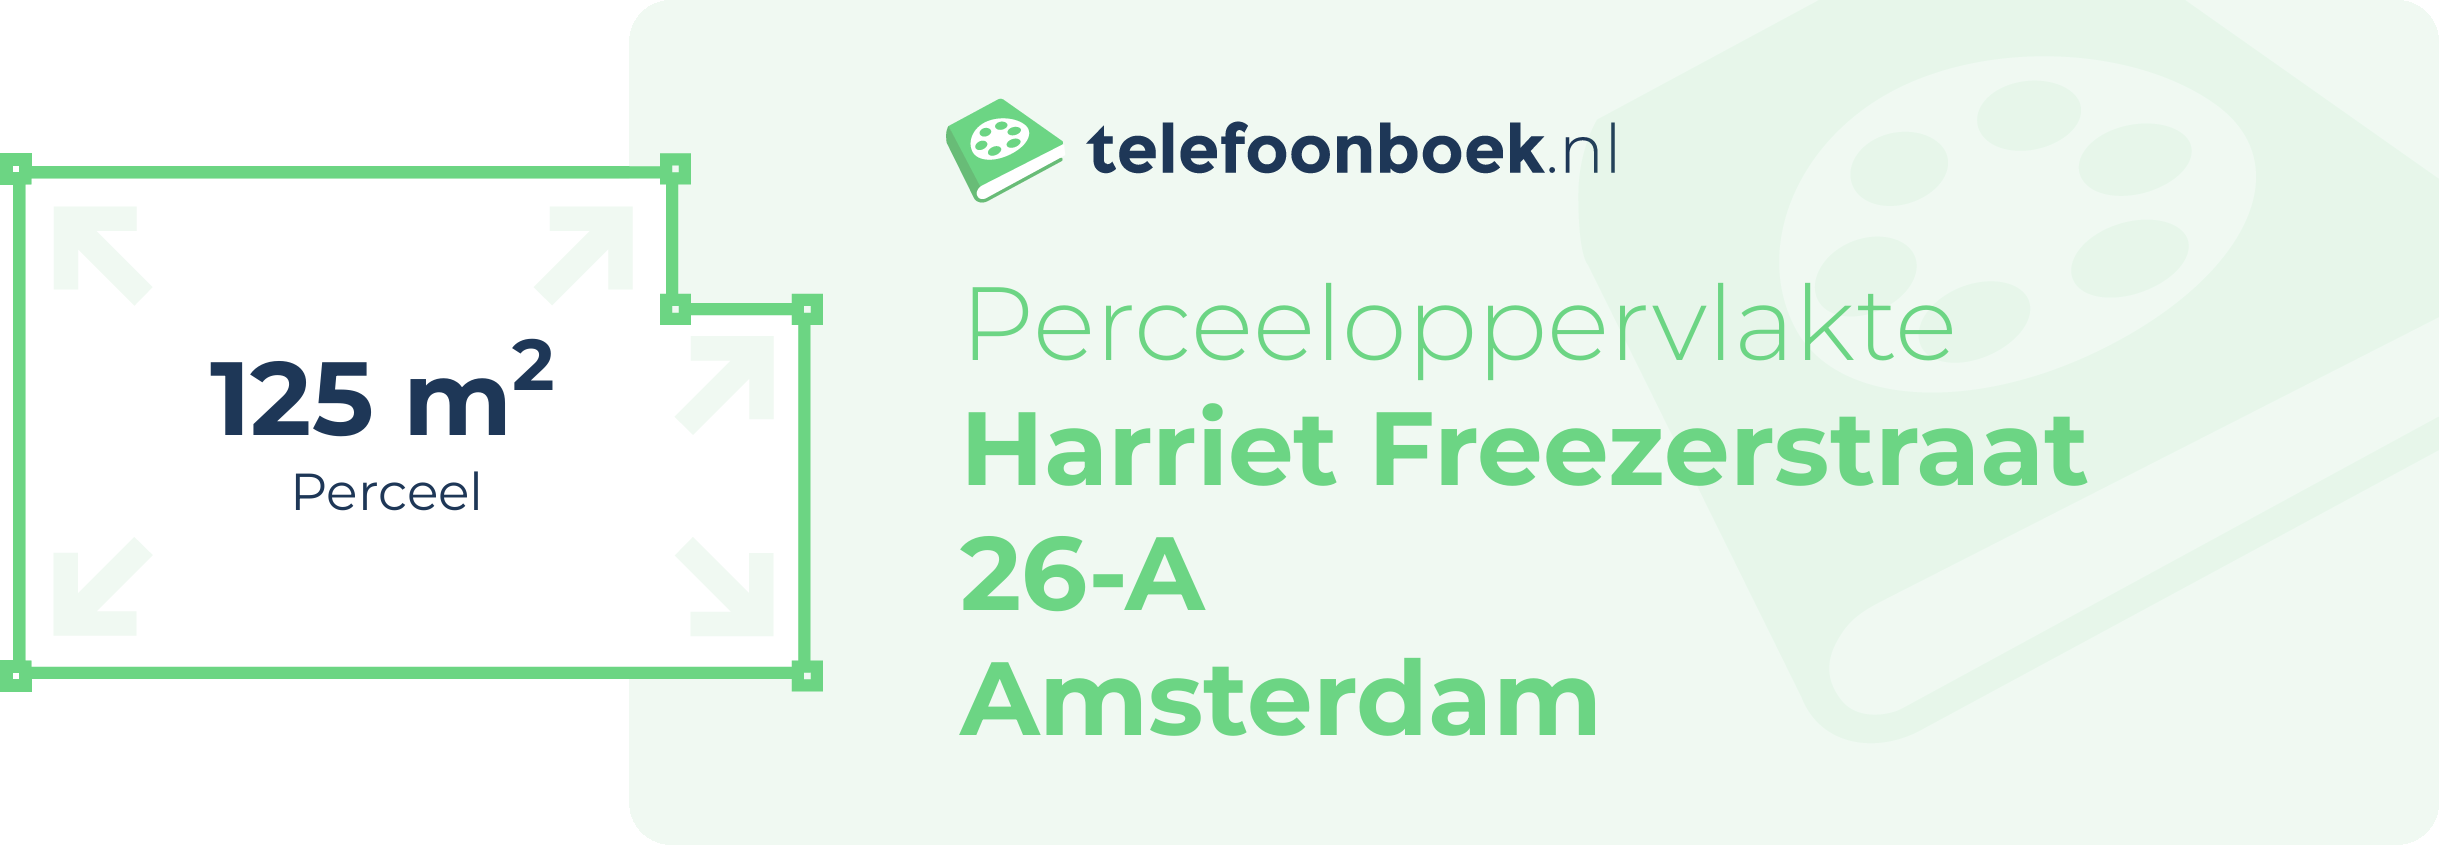 Perceeloppervlakte Harriet Freezerstraat 26-A Amsterdam